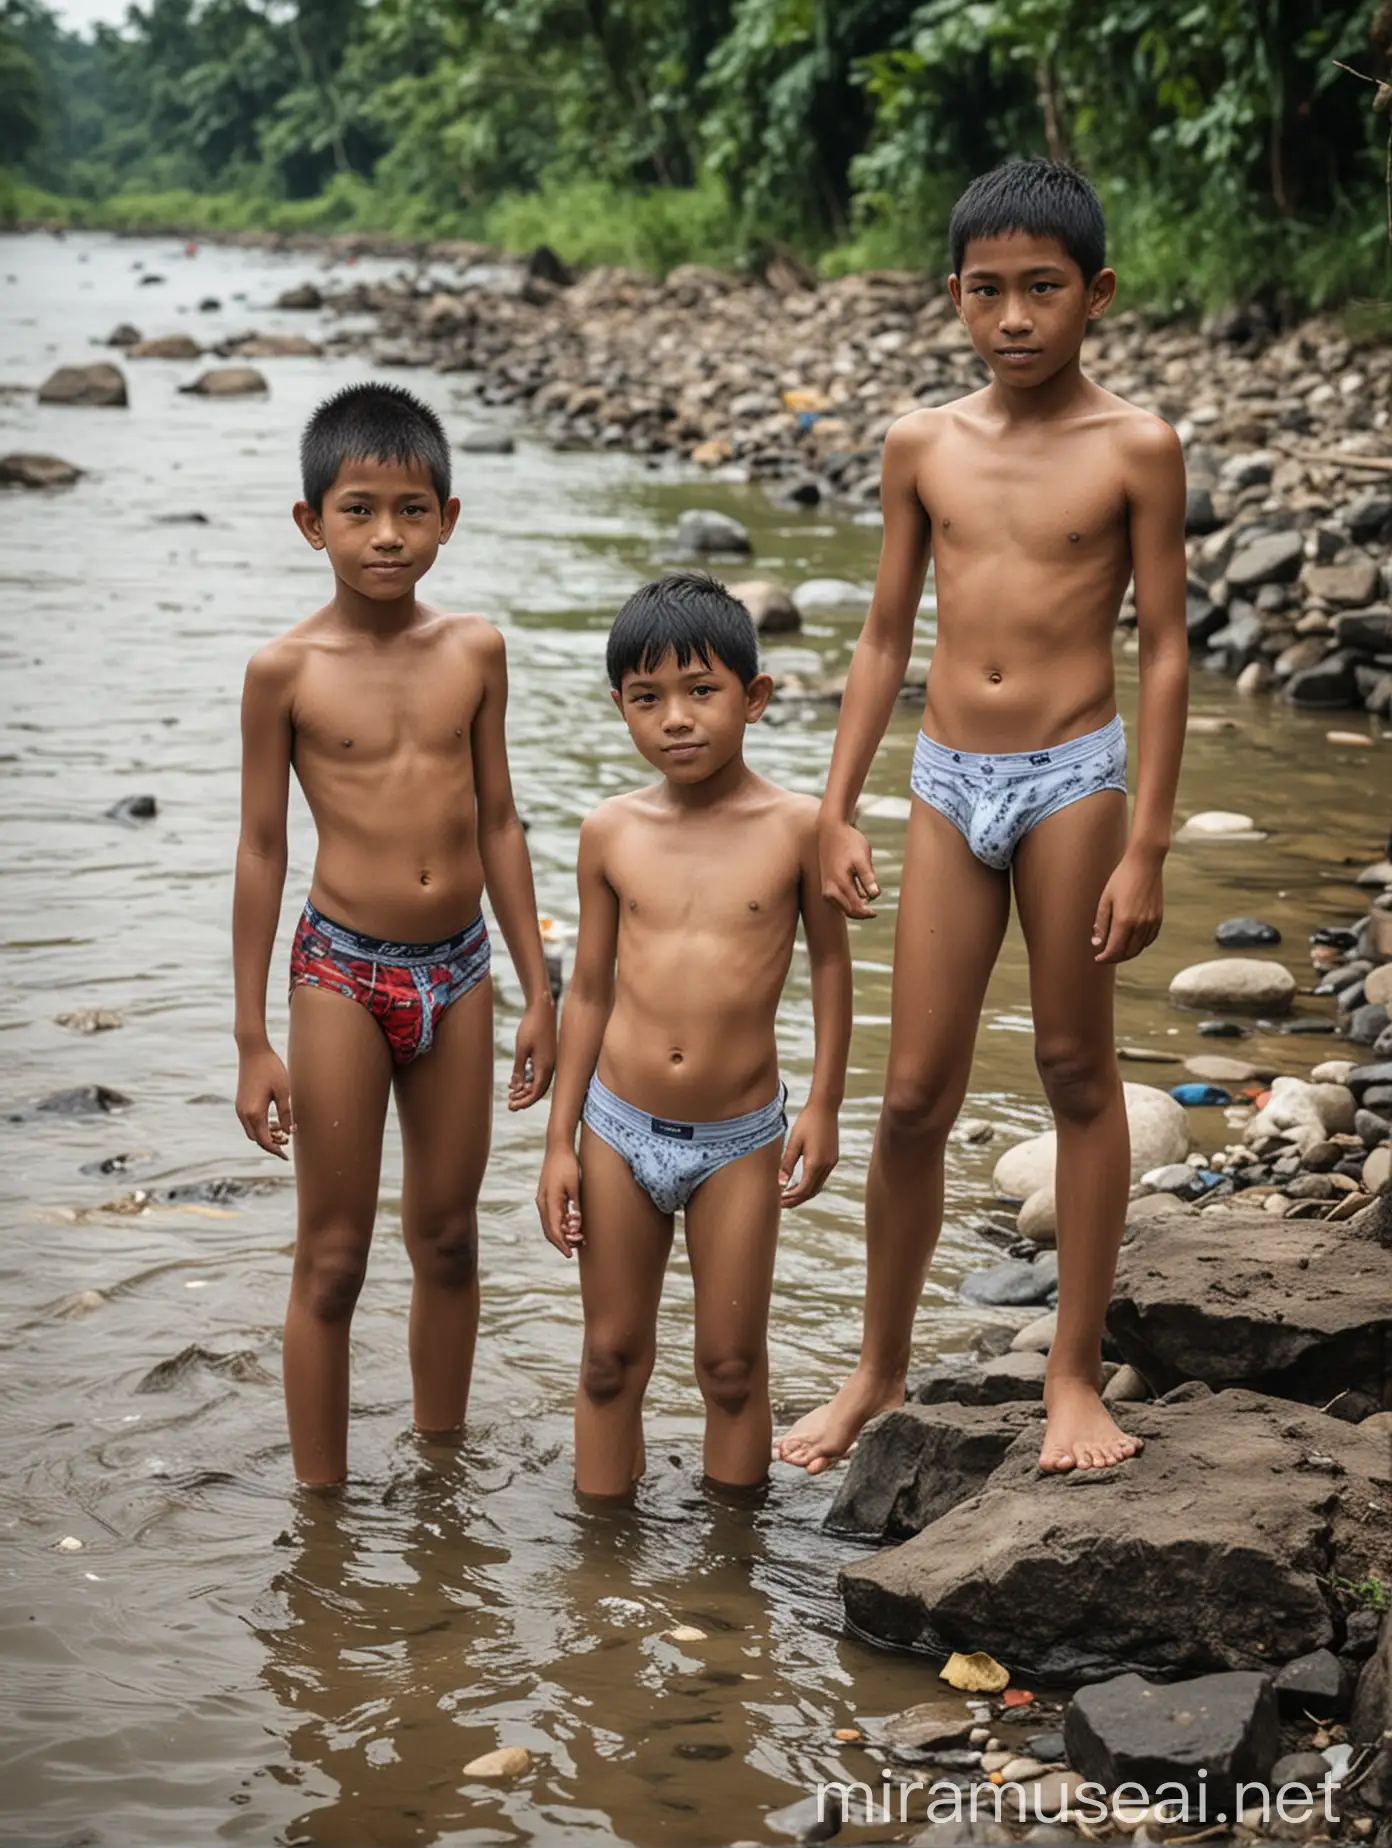 Anak Indonesia Umur 11 Tahun Laki Laki Memakai Celana Dalam Di Sungai Bersama Temannya Umur 11 Tahun Laki Laki Memakai Celana Dalam 